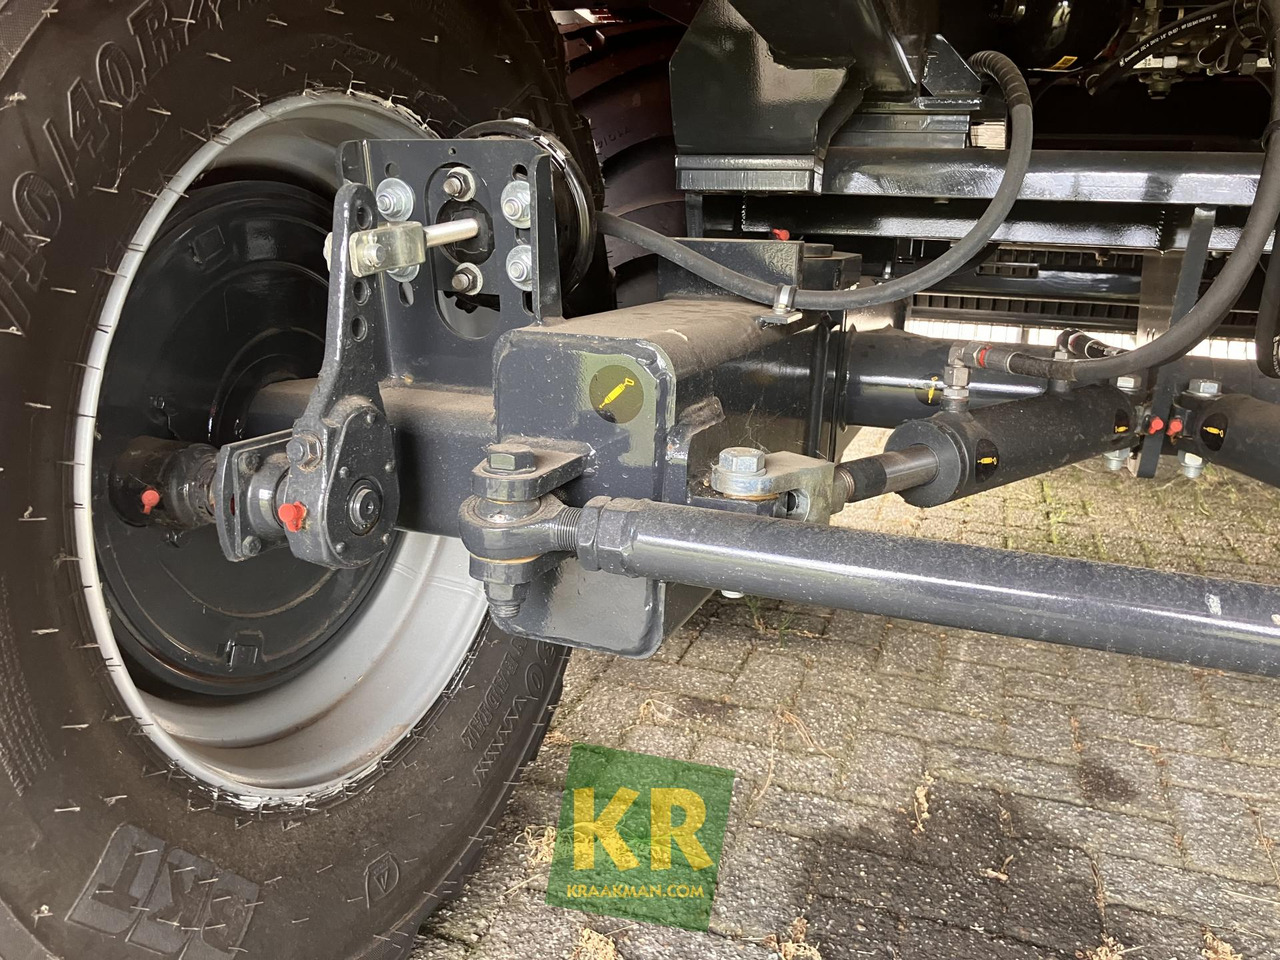 Self-loading wagon RAPIDE 55S Schuitemaker, SR-